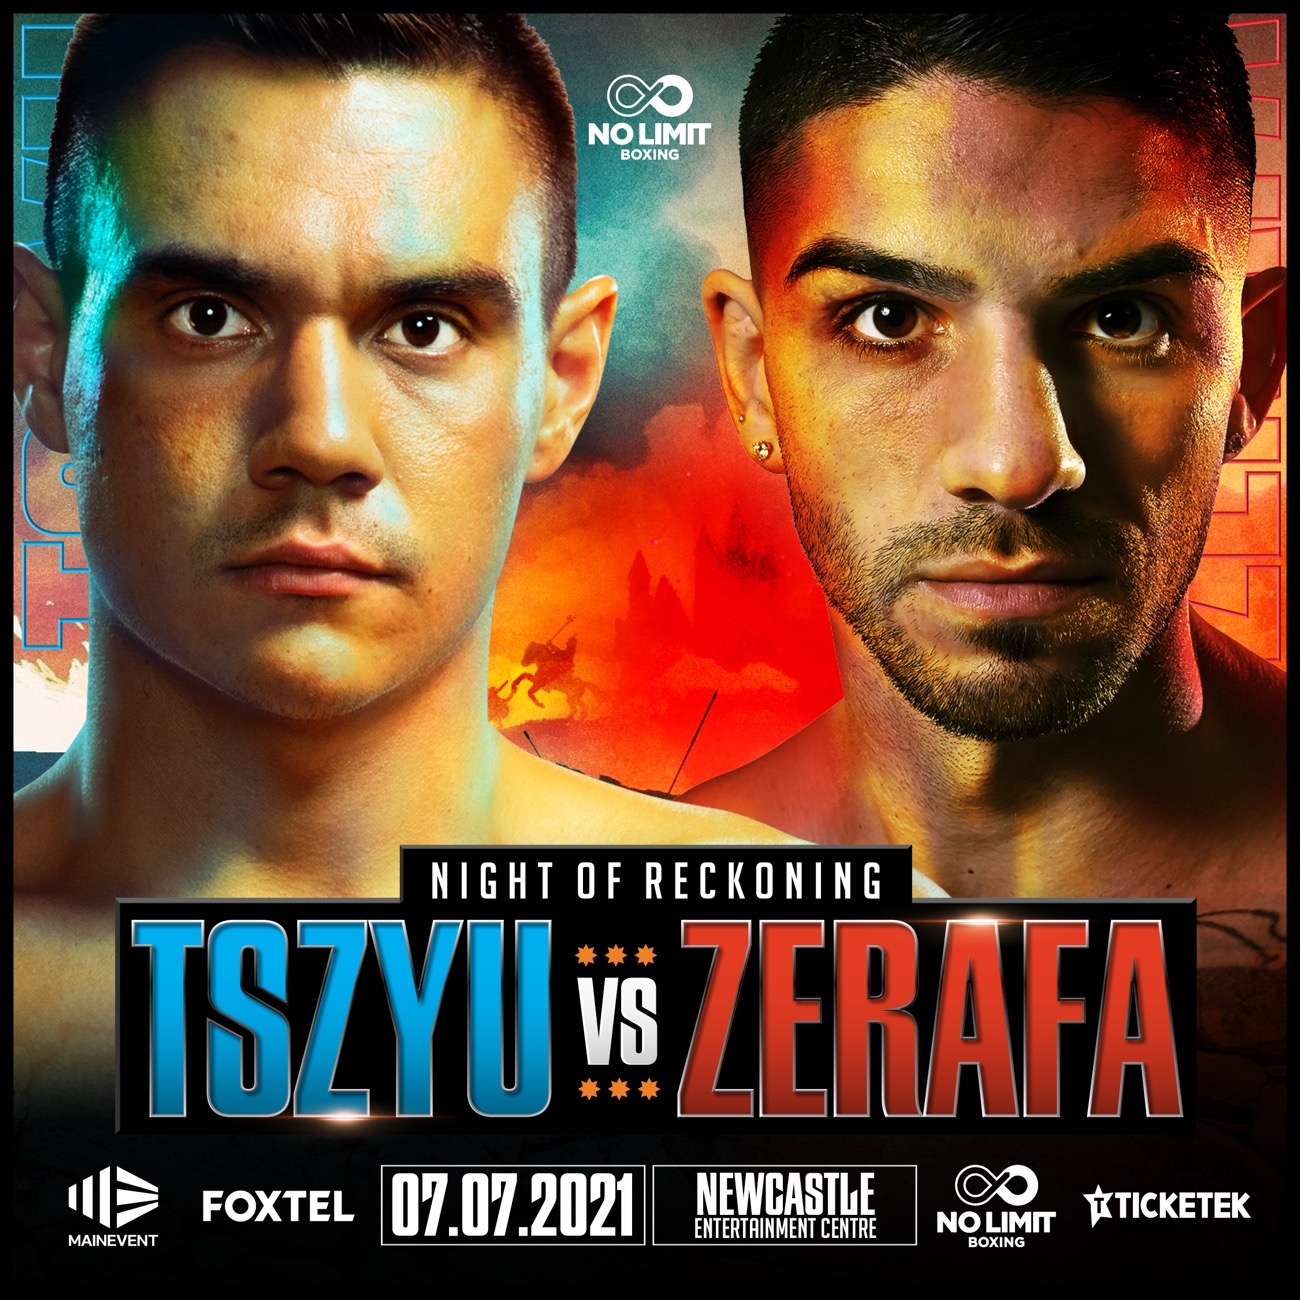 Image: Tim Tszyu vs. Michael Zerafa on July 7th in Australia